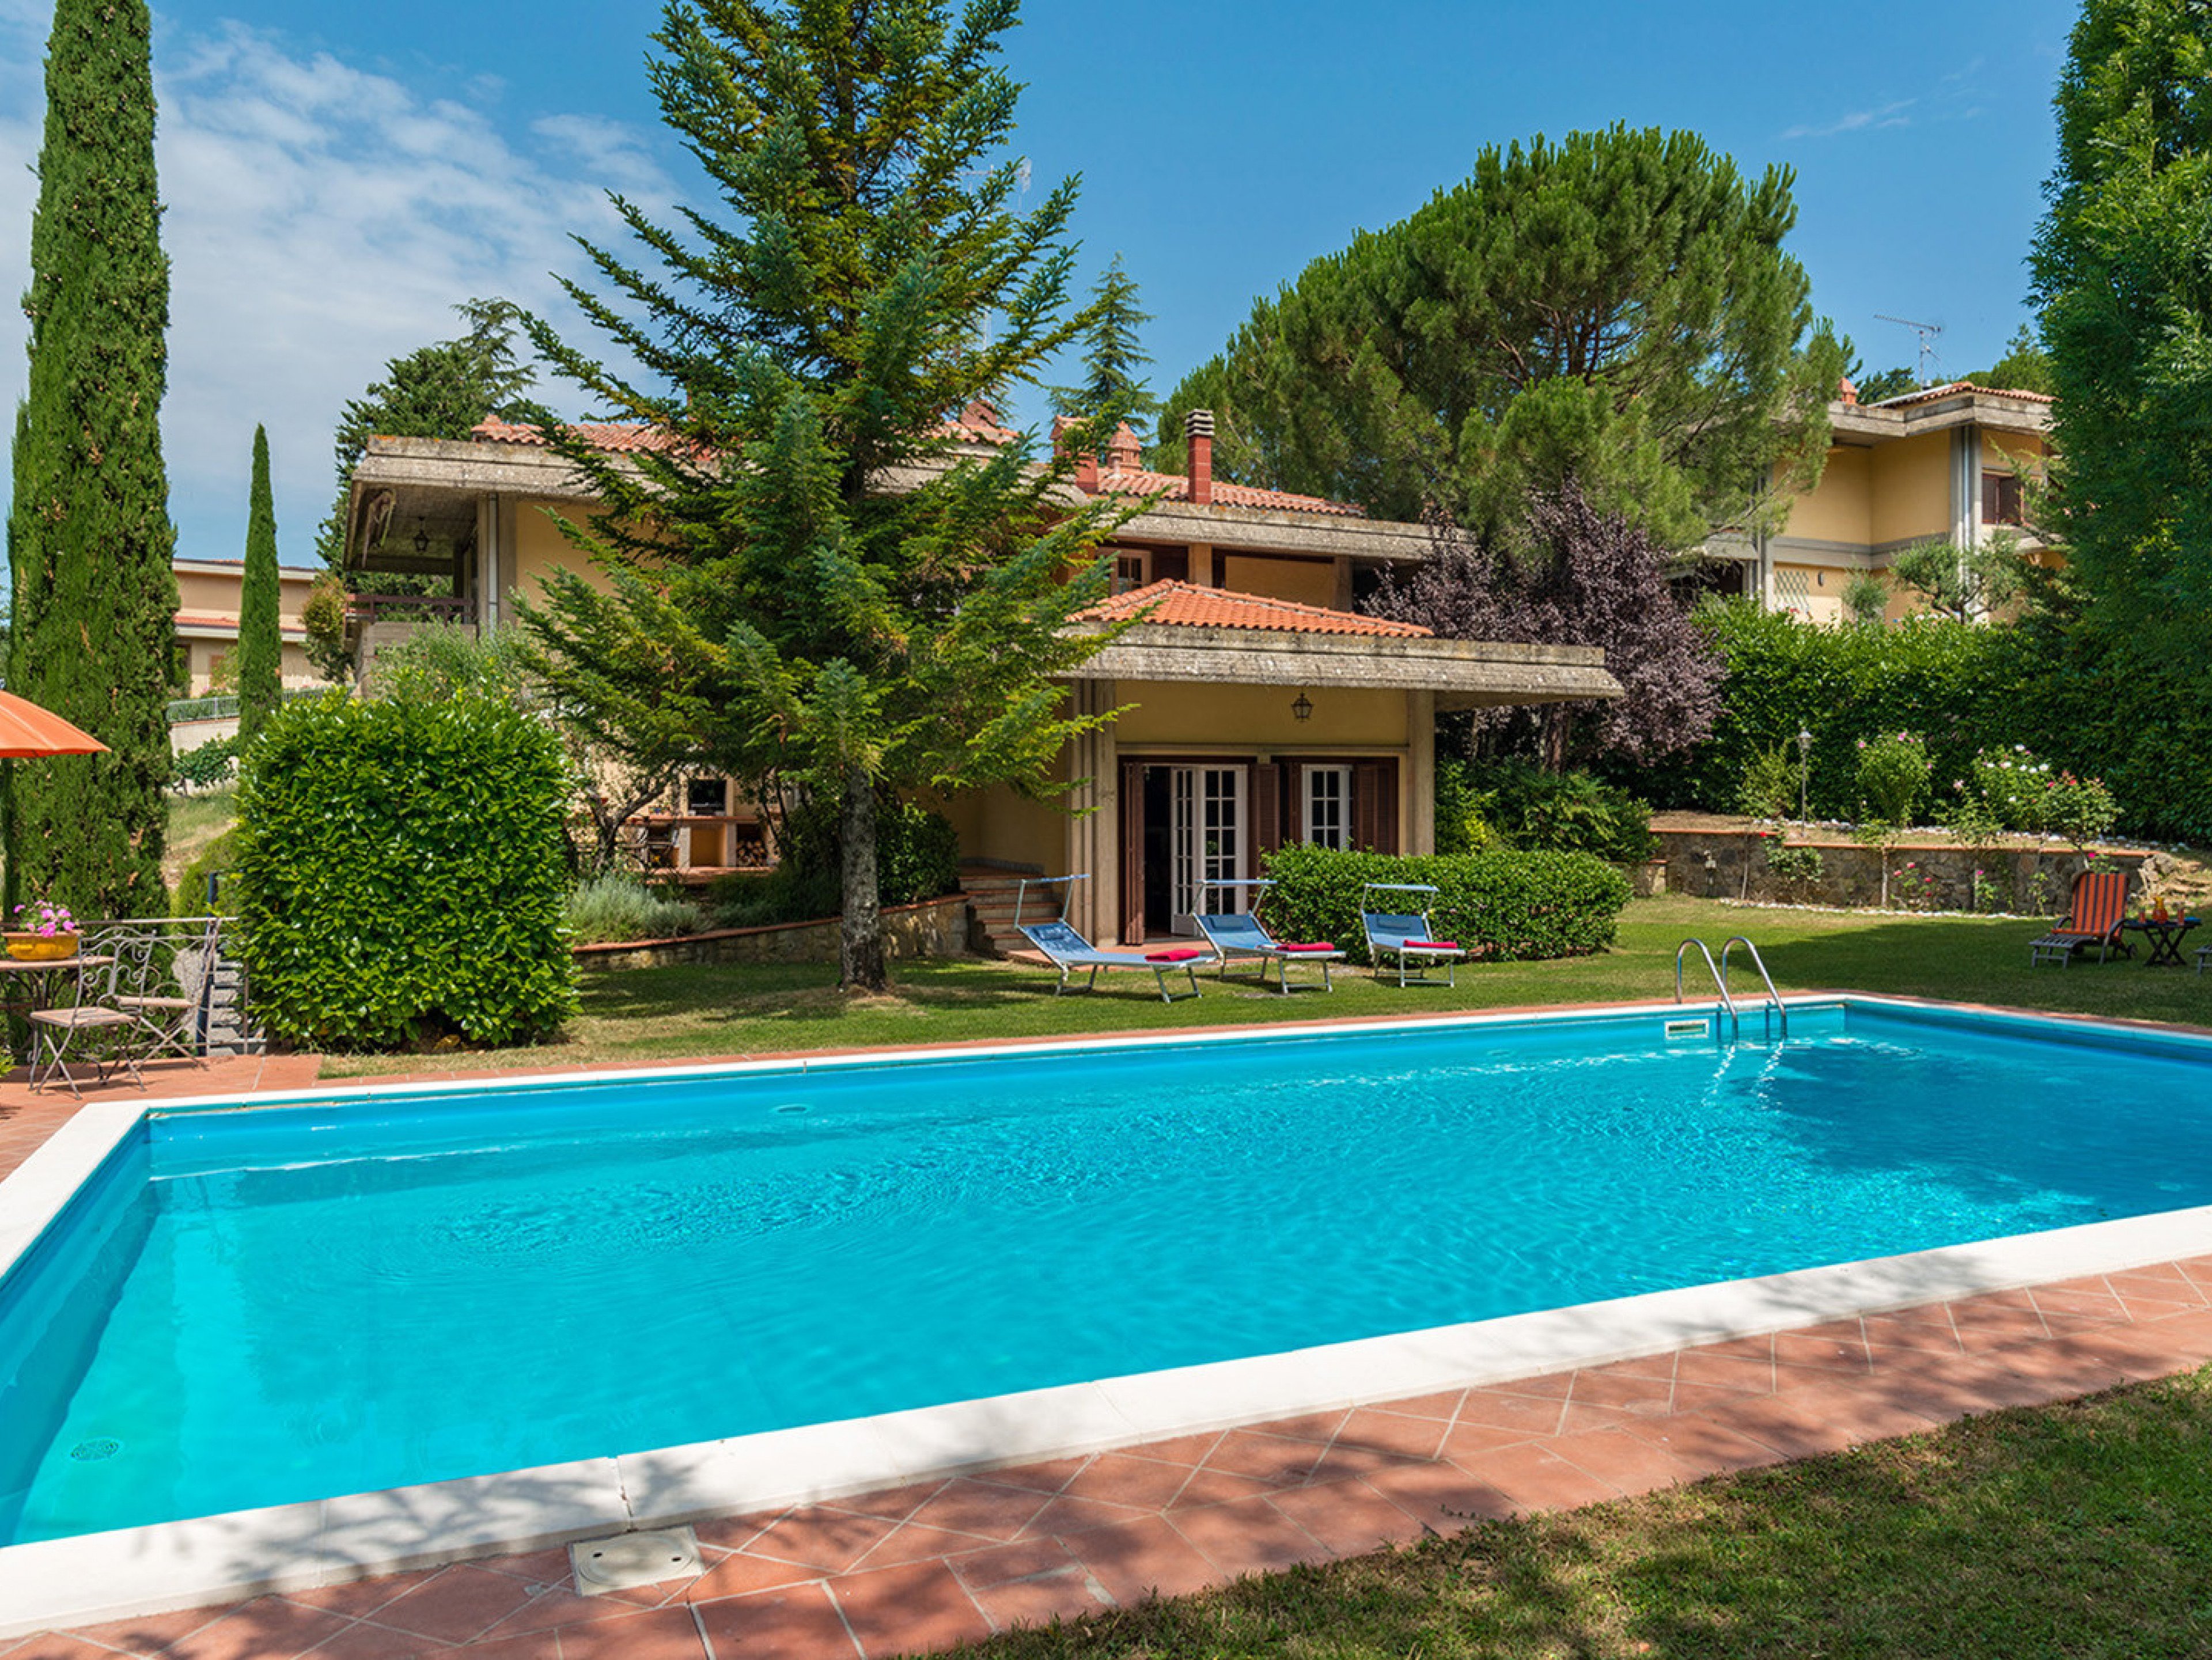 Villa Monica 4 bedroom vacation rentals in Europe